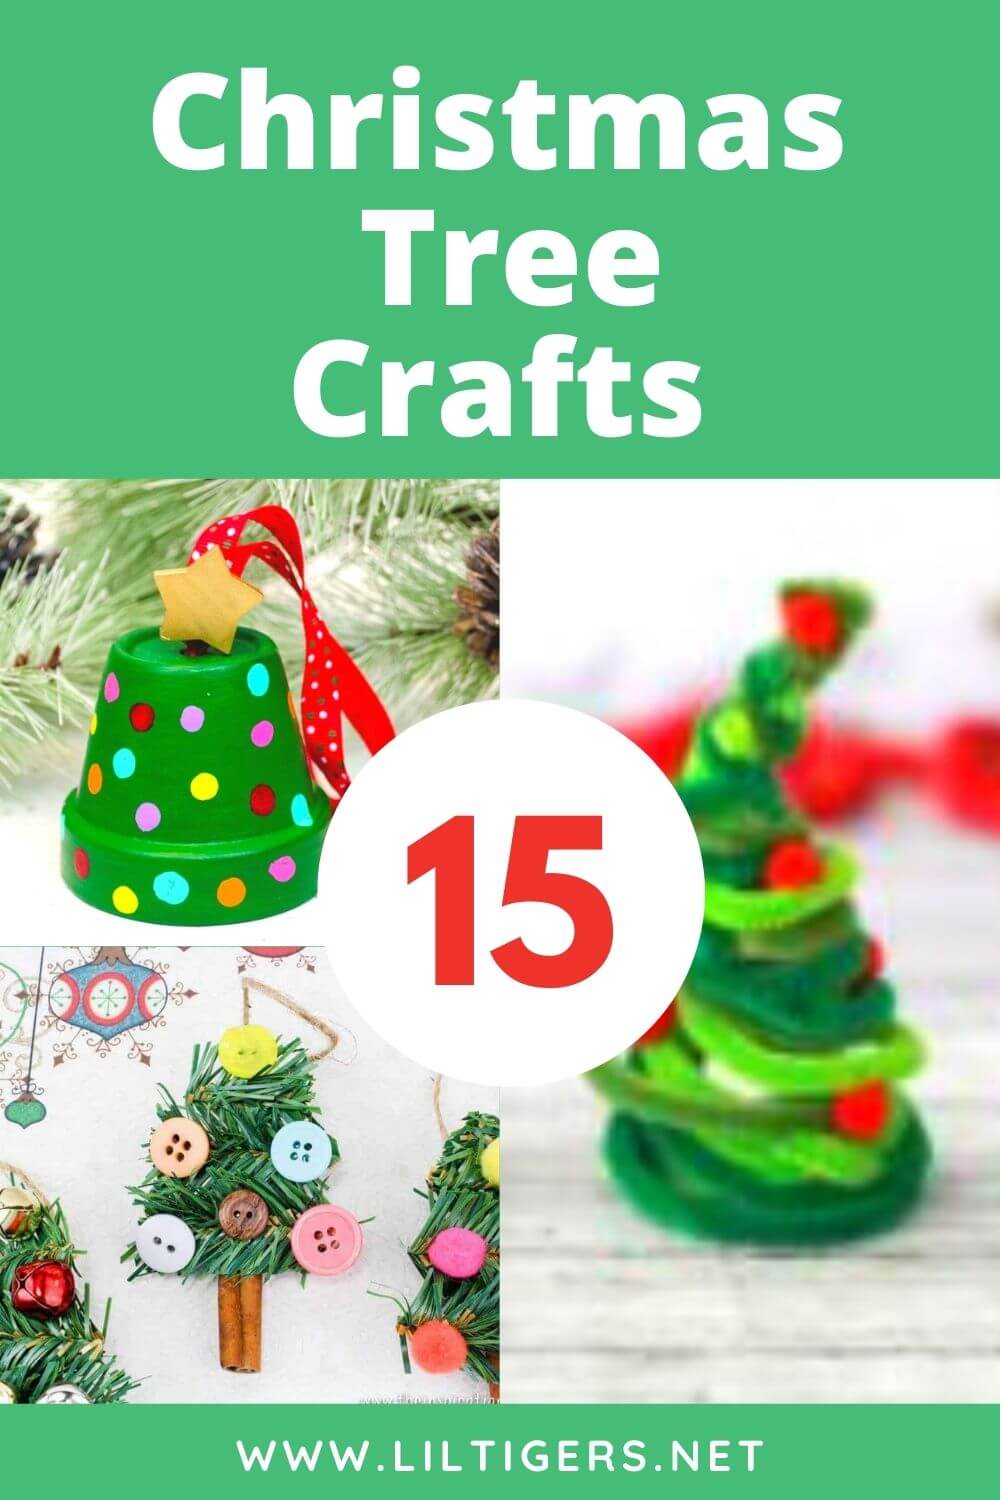 Easy Christmas Tree Craft for Kids